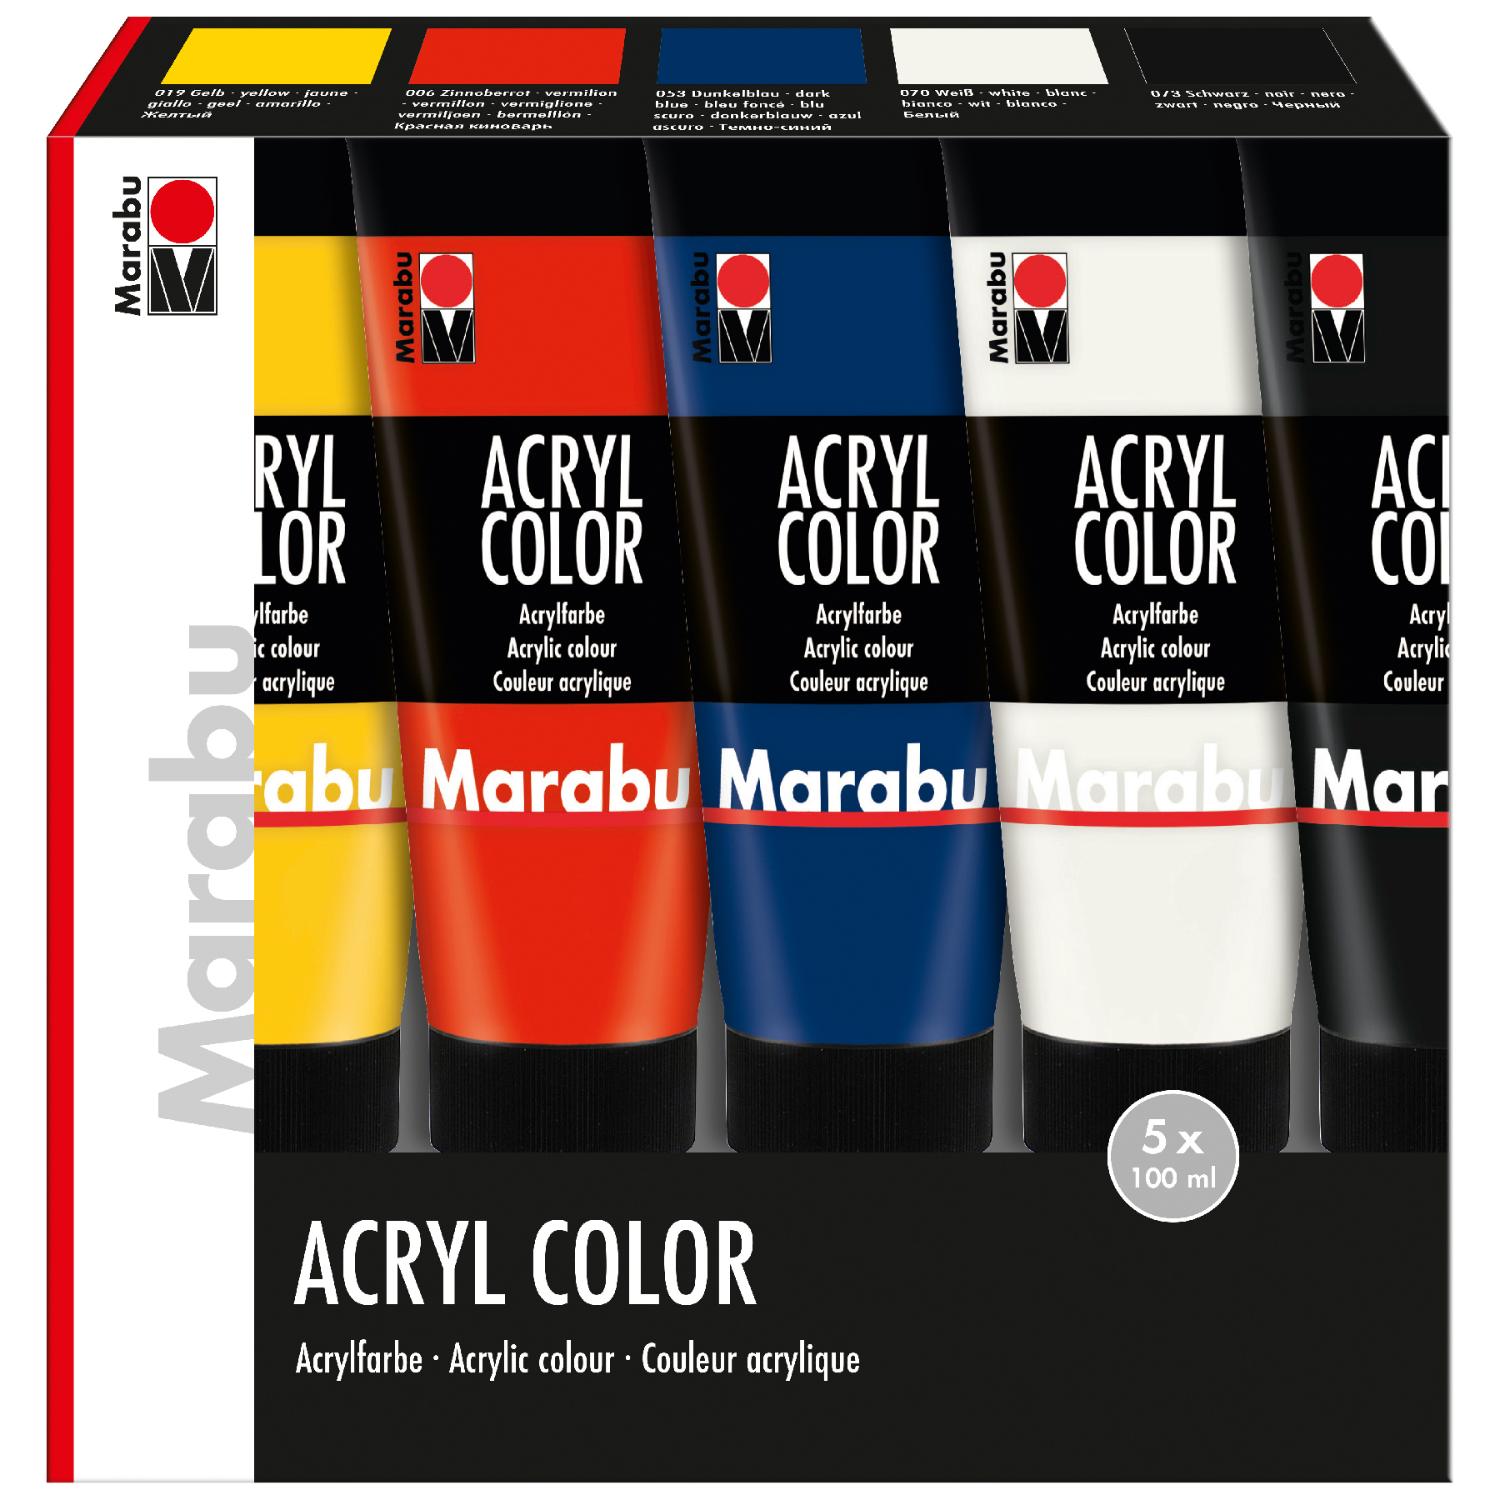 Marabu Acrylfarbe AcrylColor Starter Set 5x 100 ml